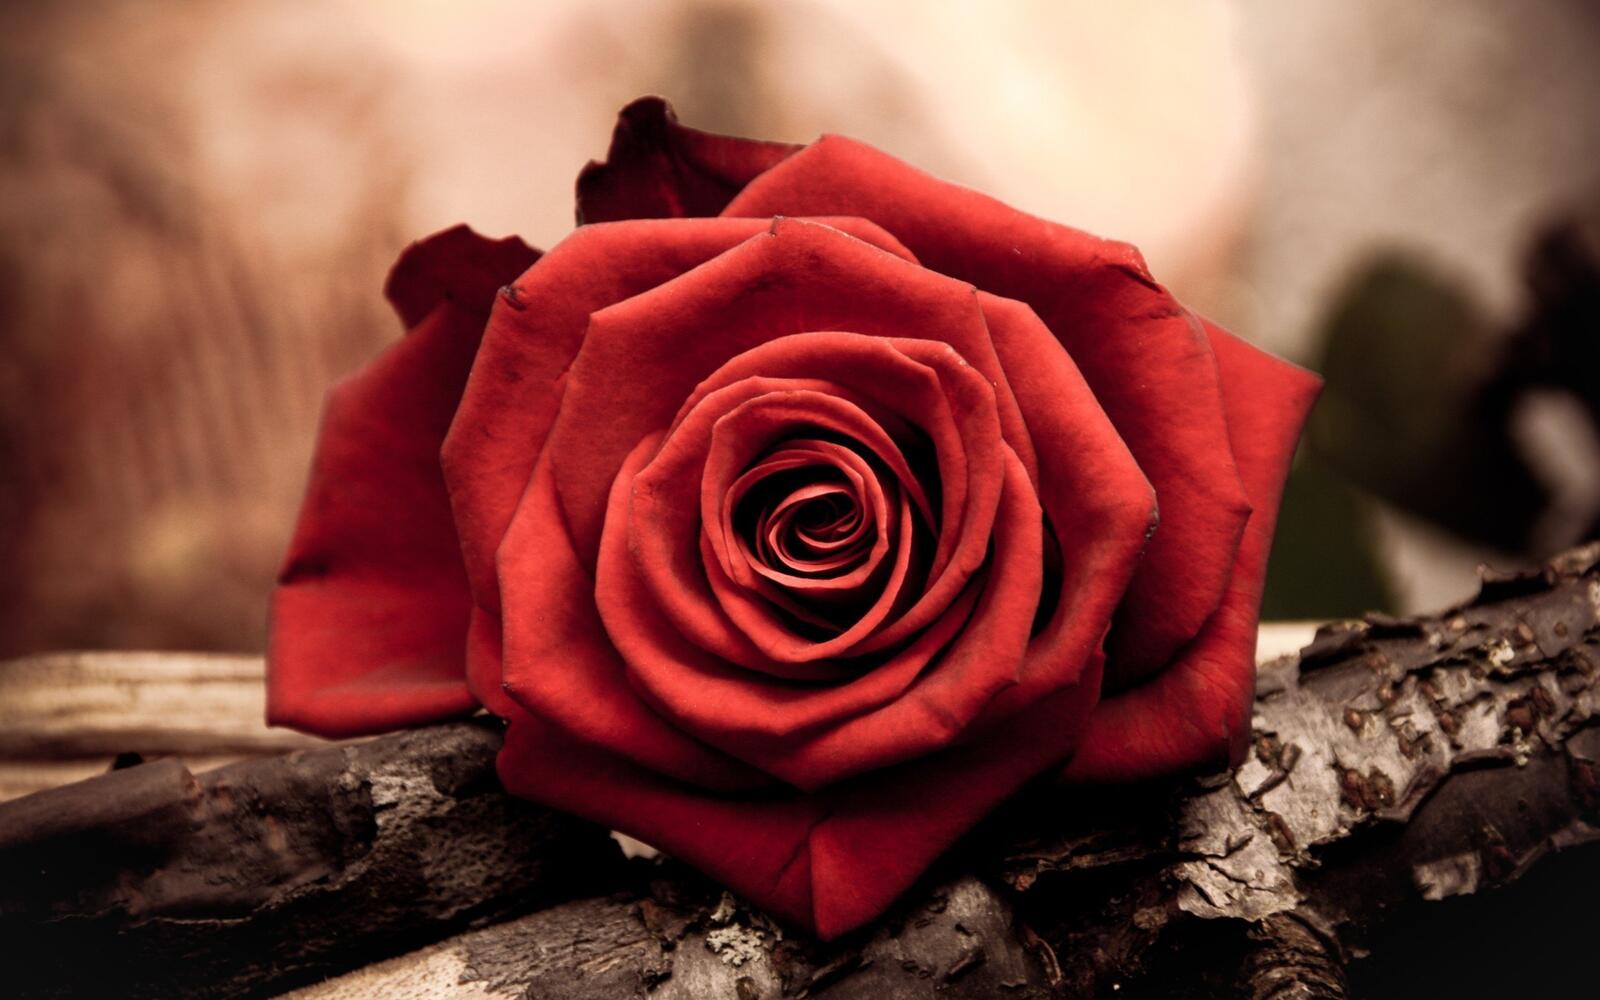 Wallpapers love rose roses on the desktop